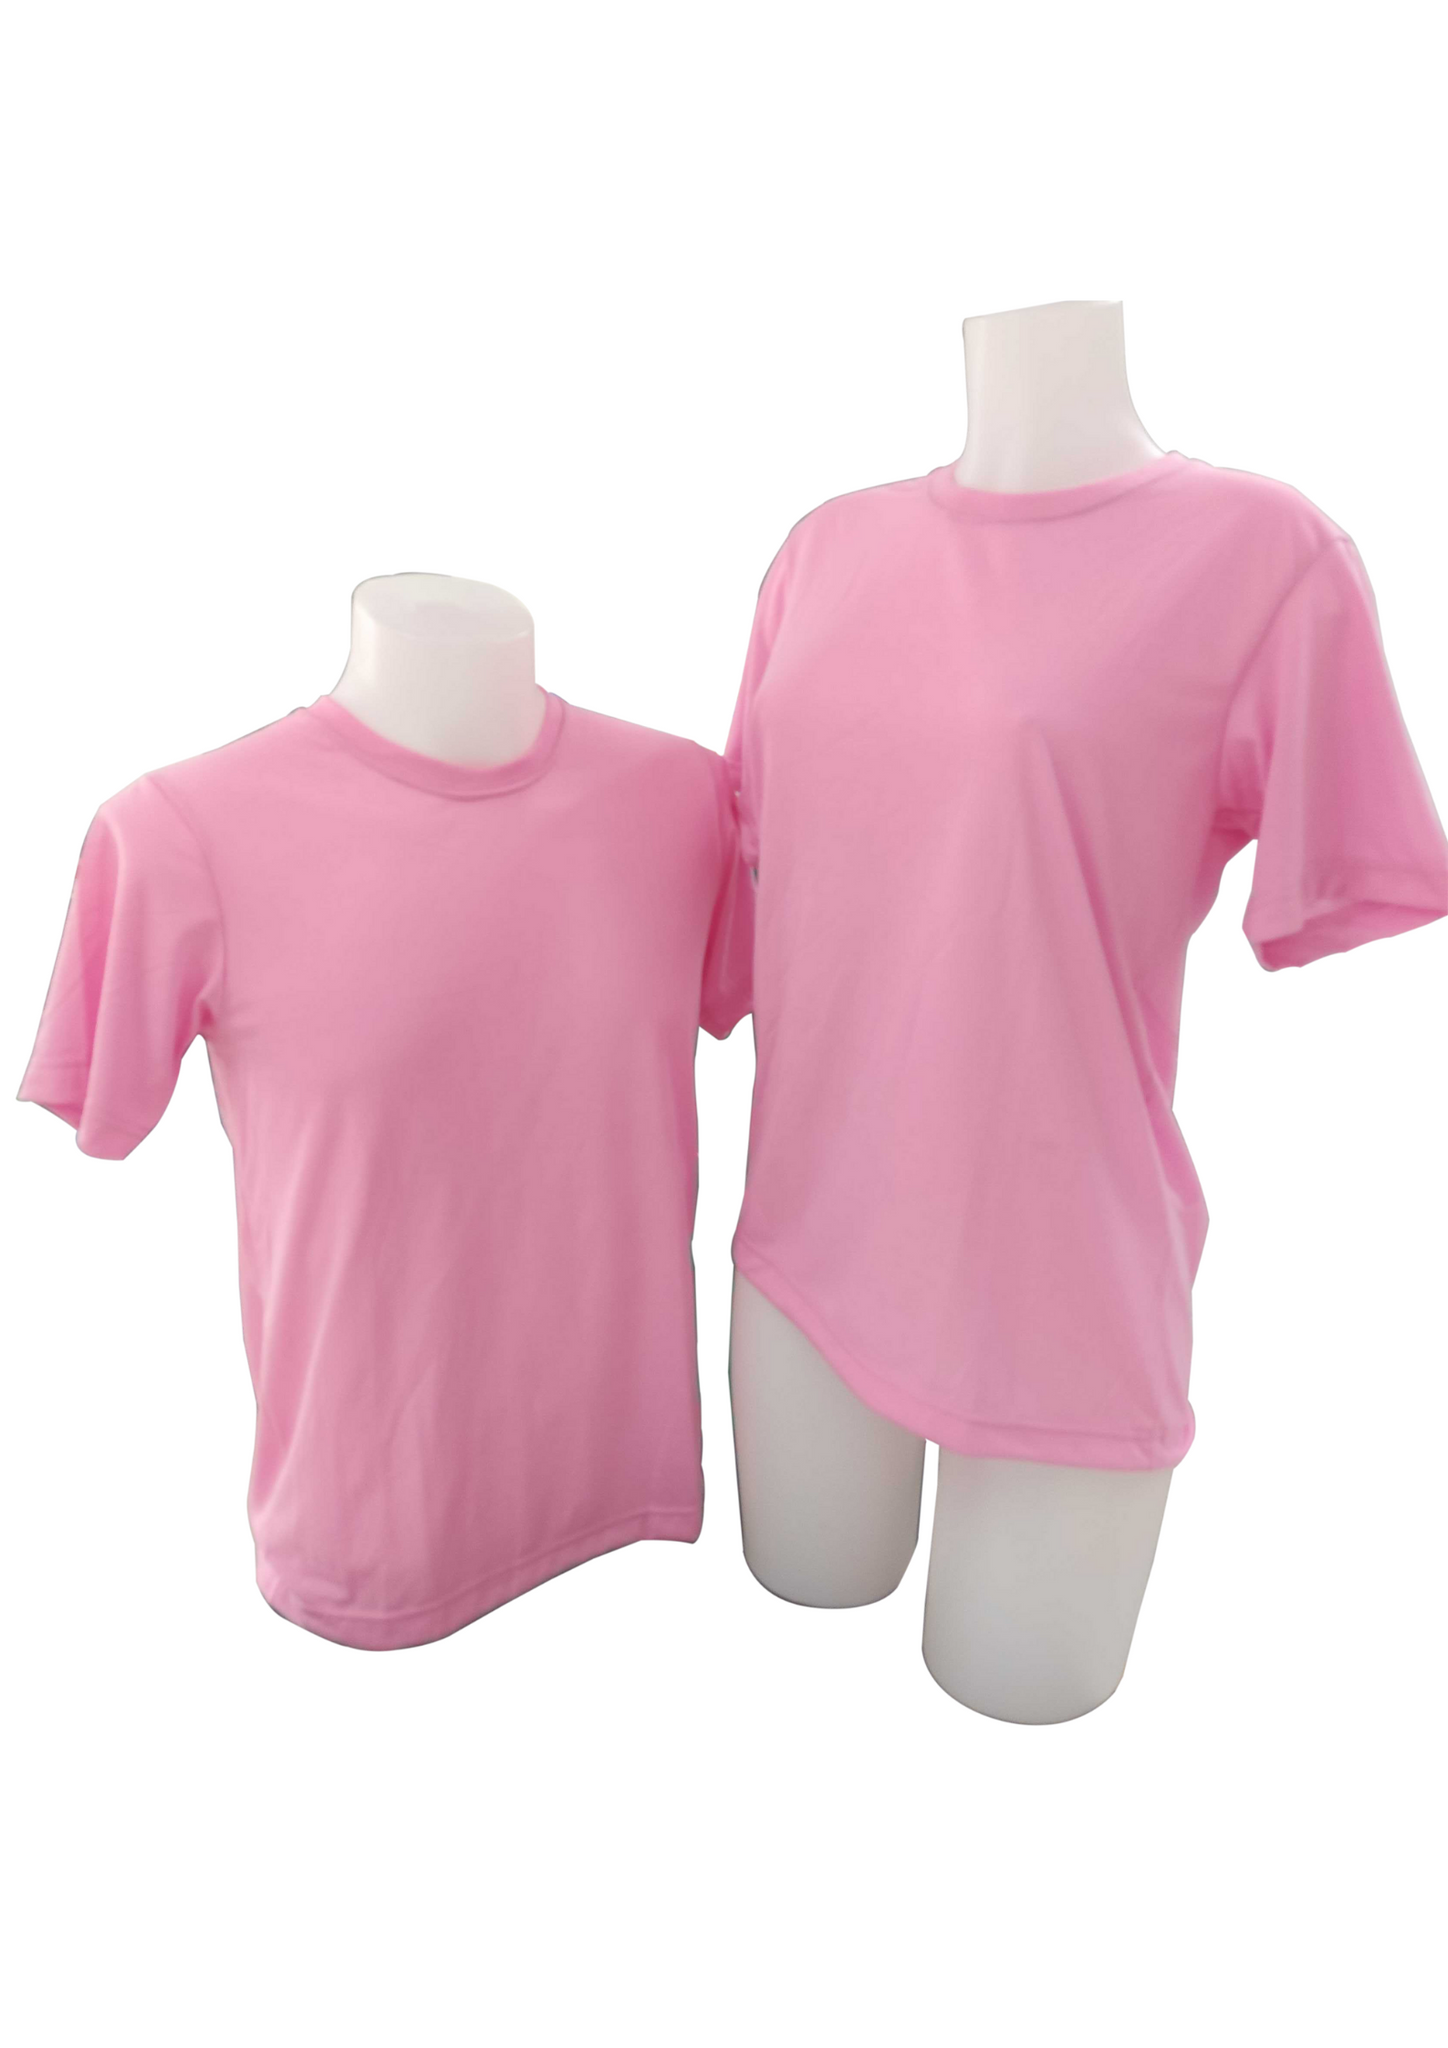 Pink Plain T-shirt on Sale price at Zellbury 3019